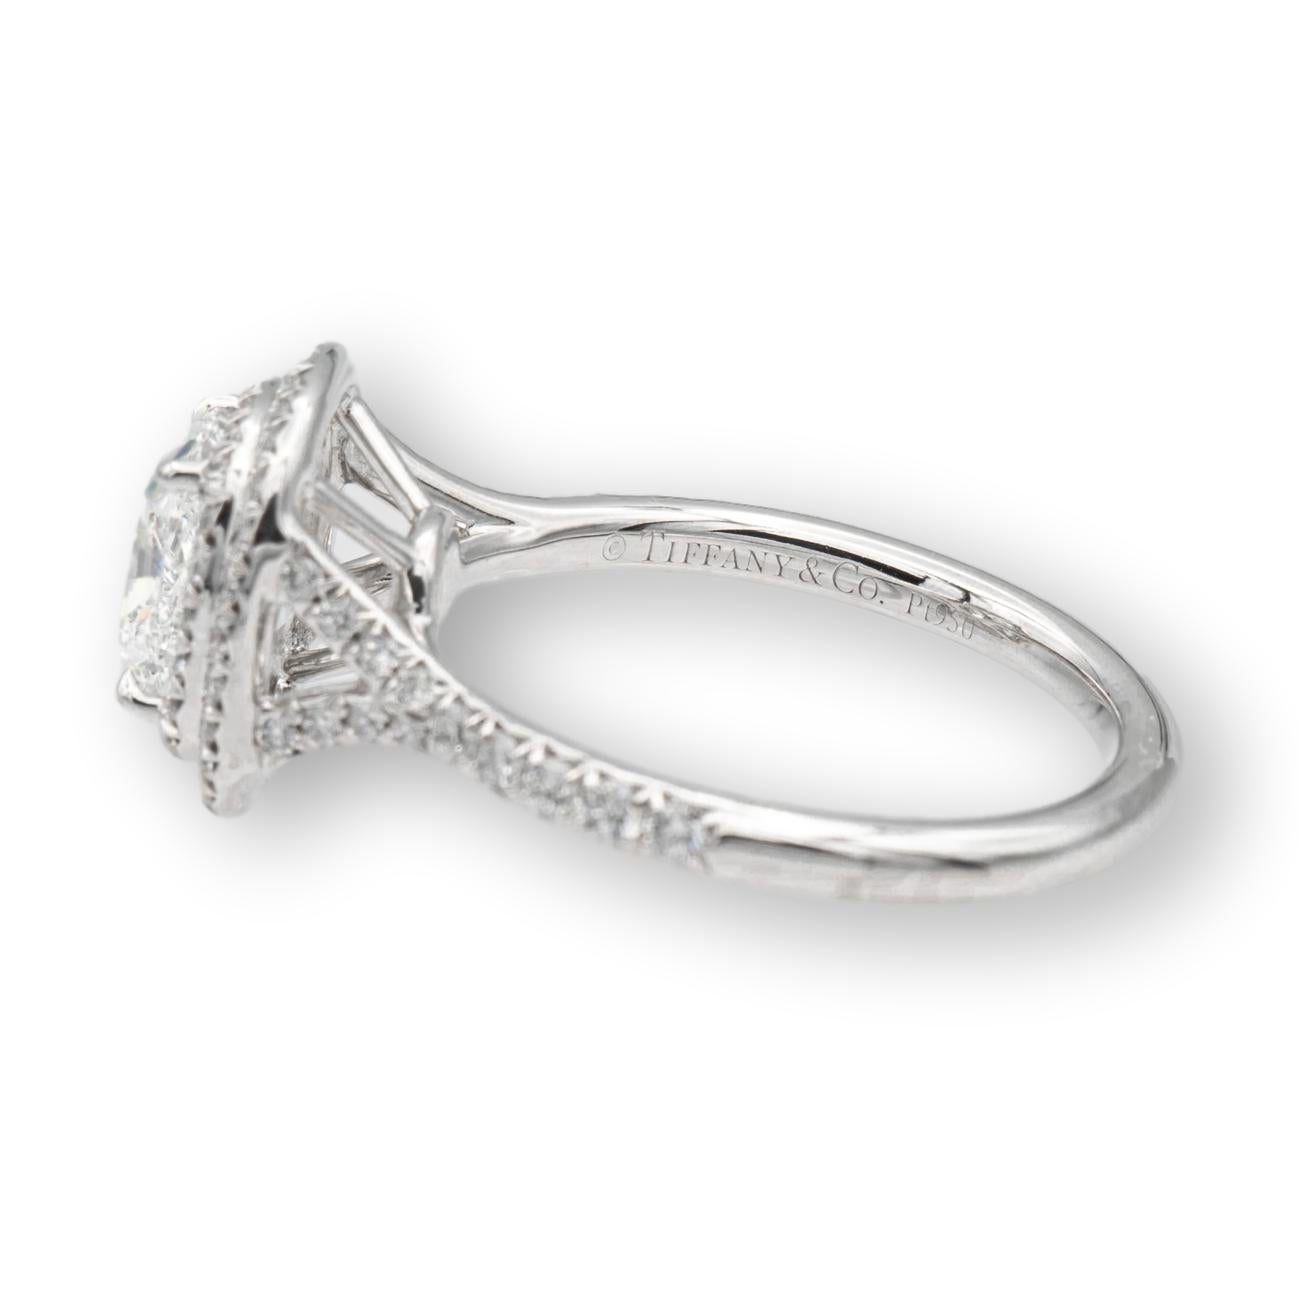 Modern Tiffany & Co. Soleste Platinum Diamond Engagement Ring 1.92 Cts Ttl. IVS1 w/Rec.